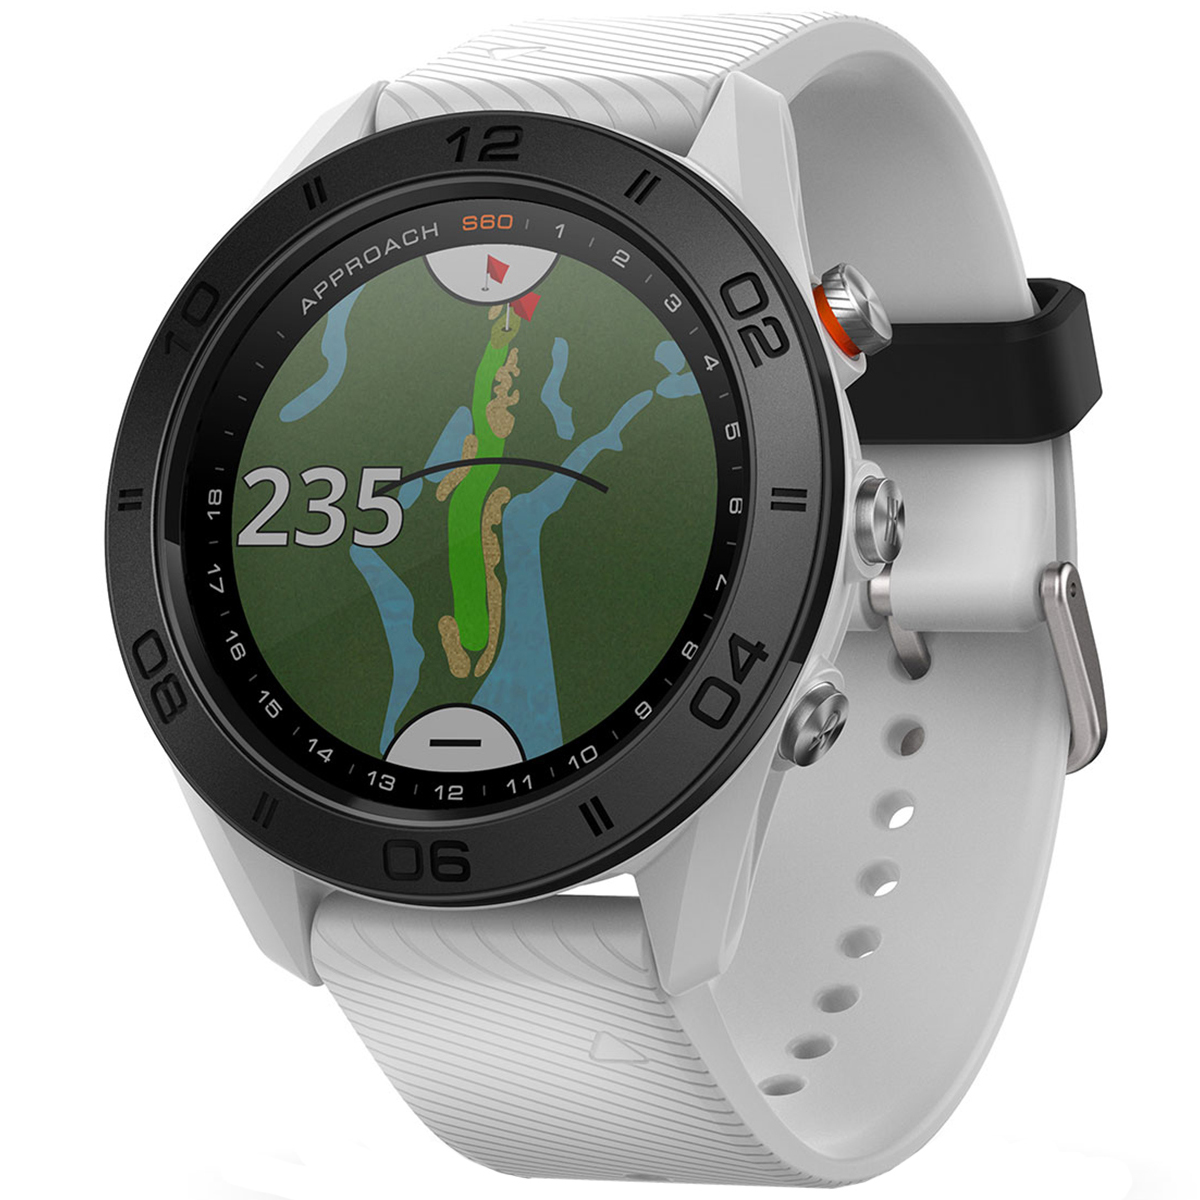 Garmin GPS watch